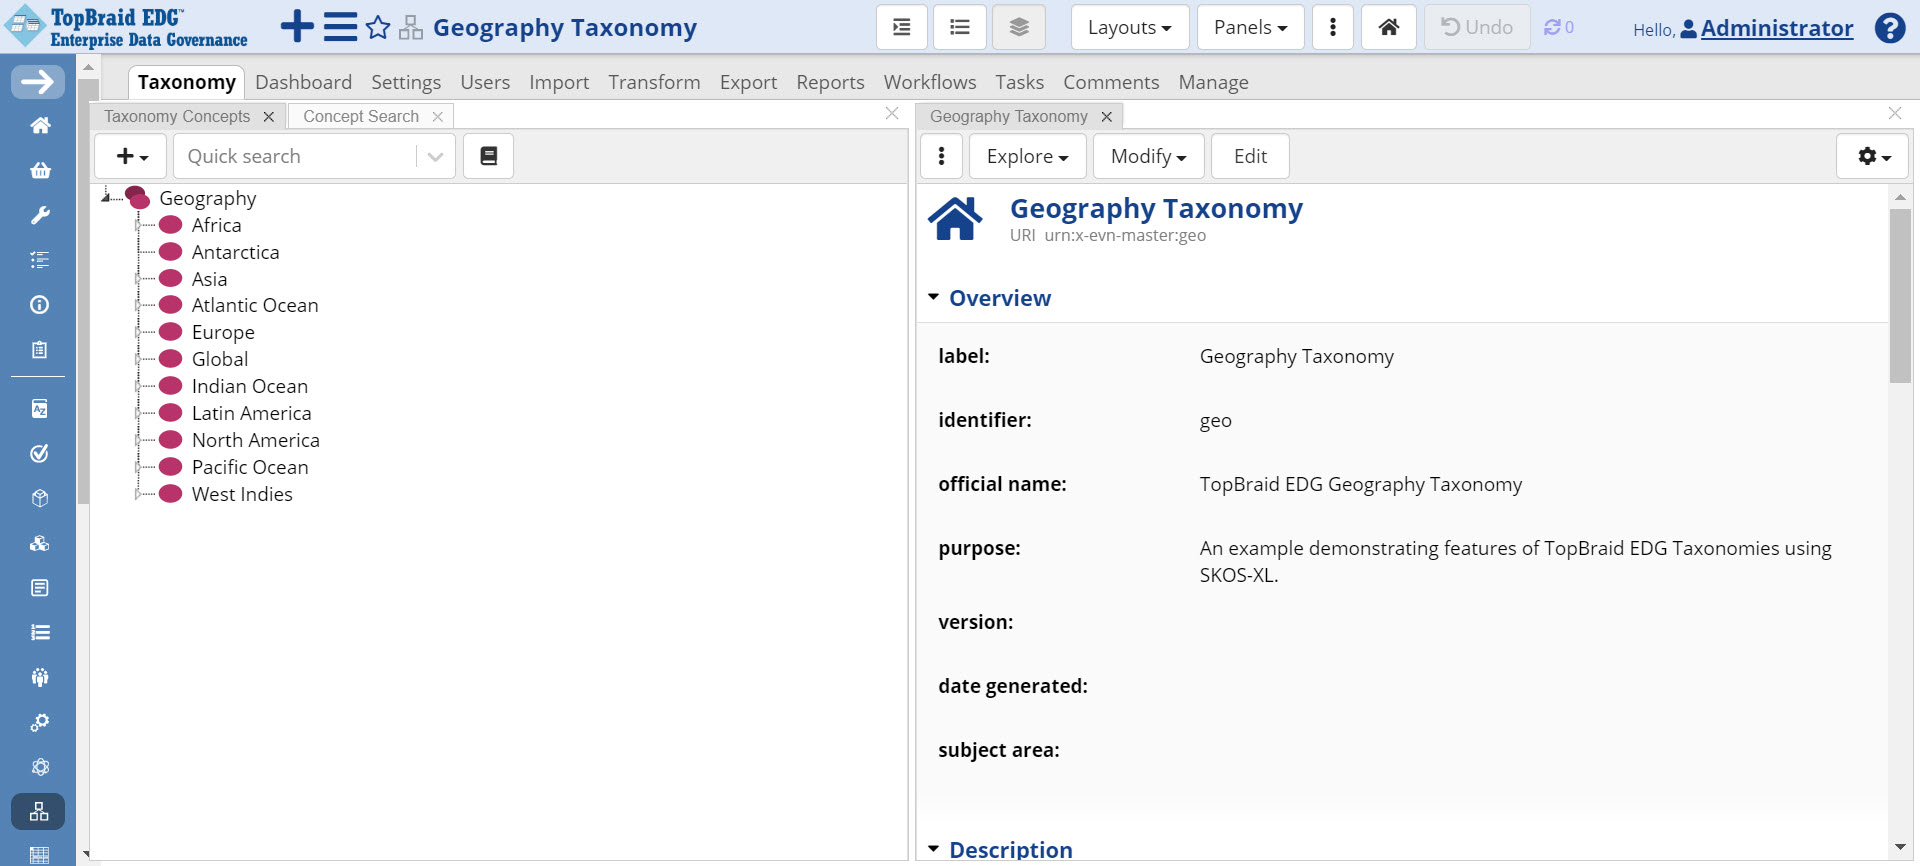 TopBraid EDG Geography Taxonomy Page